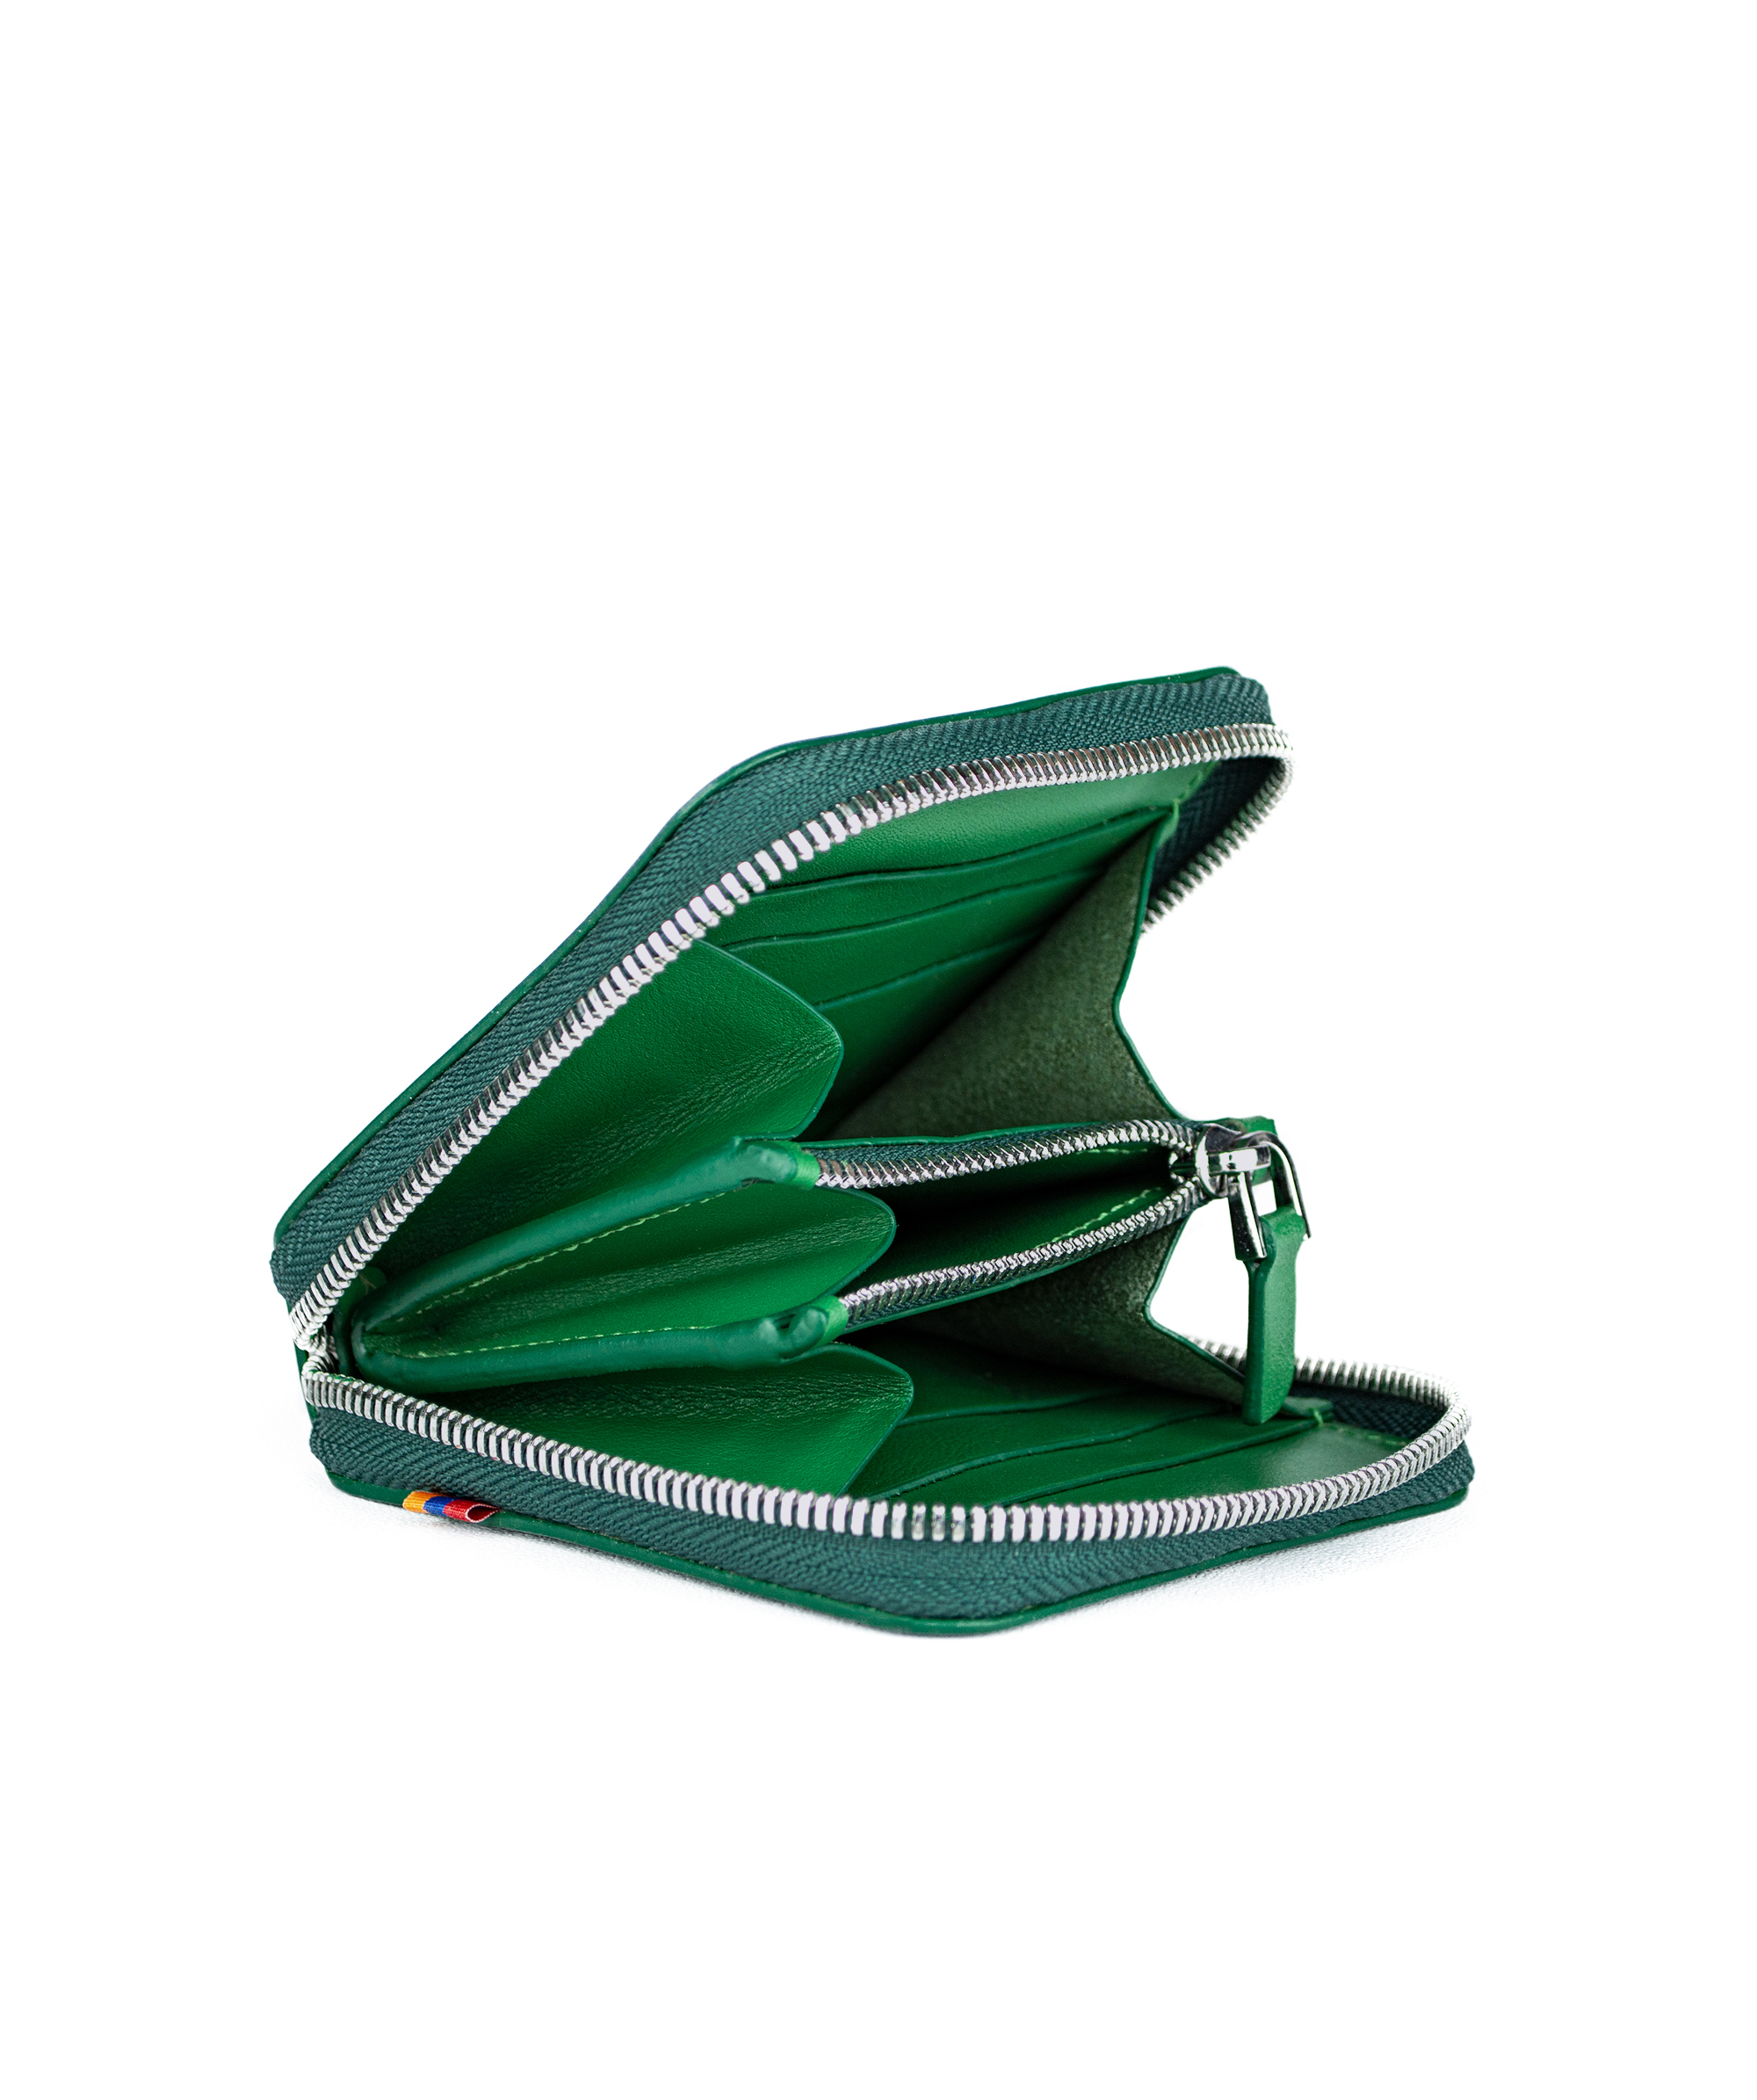 Бумажник «Lambron» Green Ray Zipper Box